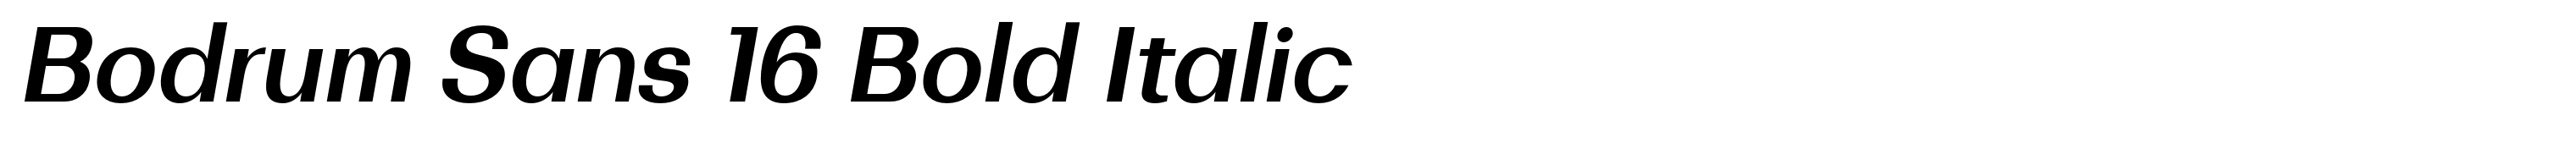 Bodrum Sans 16 Bold Italic